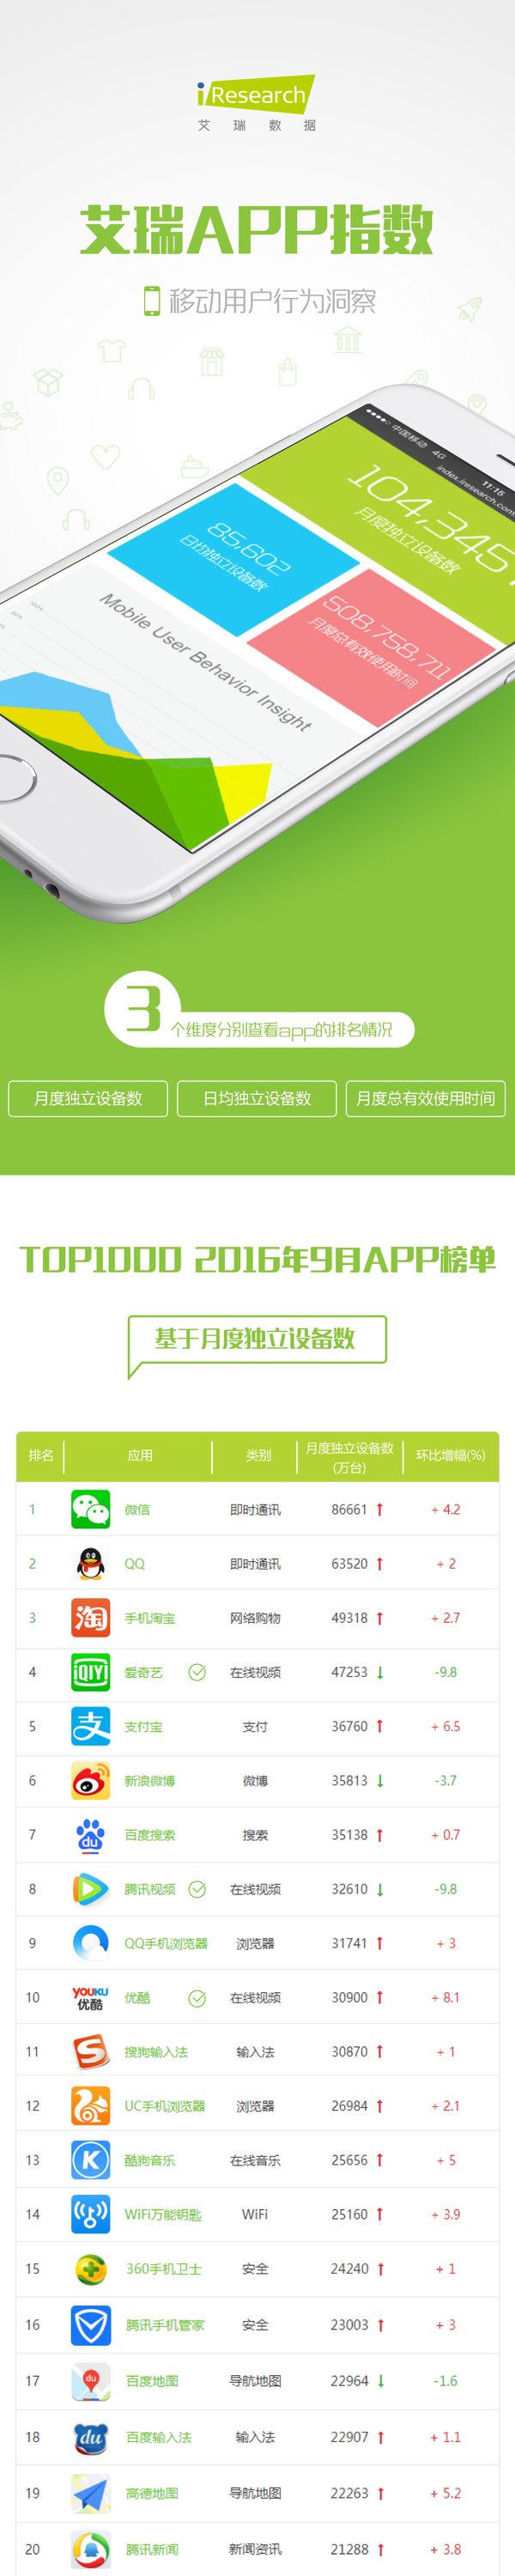 wzatv:【j2开奖】艾瑞APP指数月设备数榜单！TOP 1000！